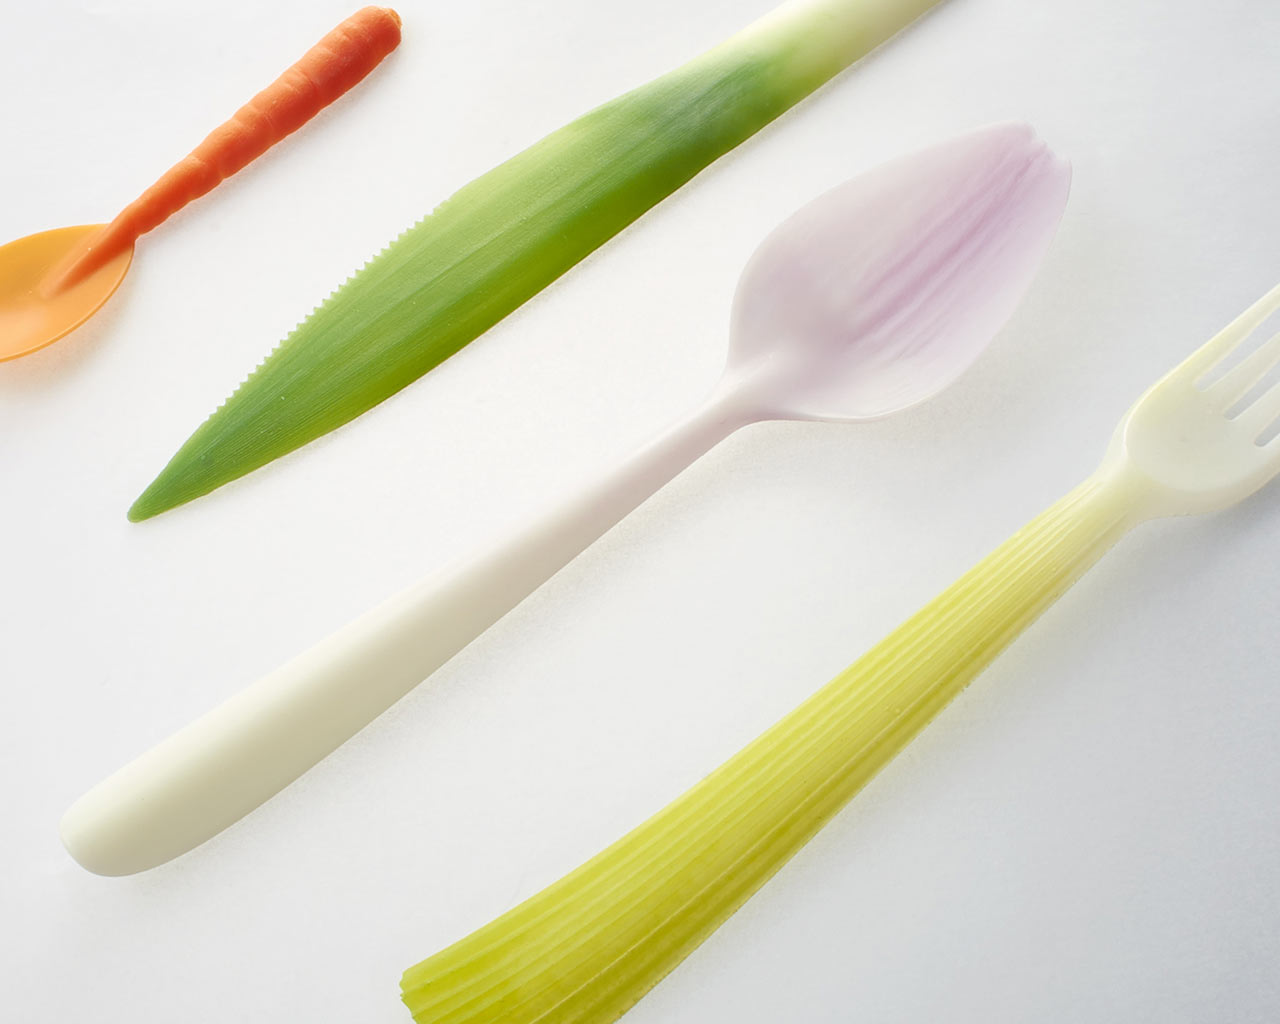 Graft: Disposable Tableware That Looks Like Vegetables